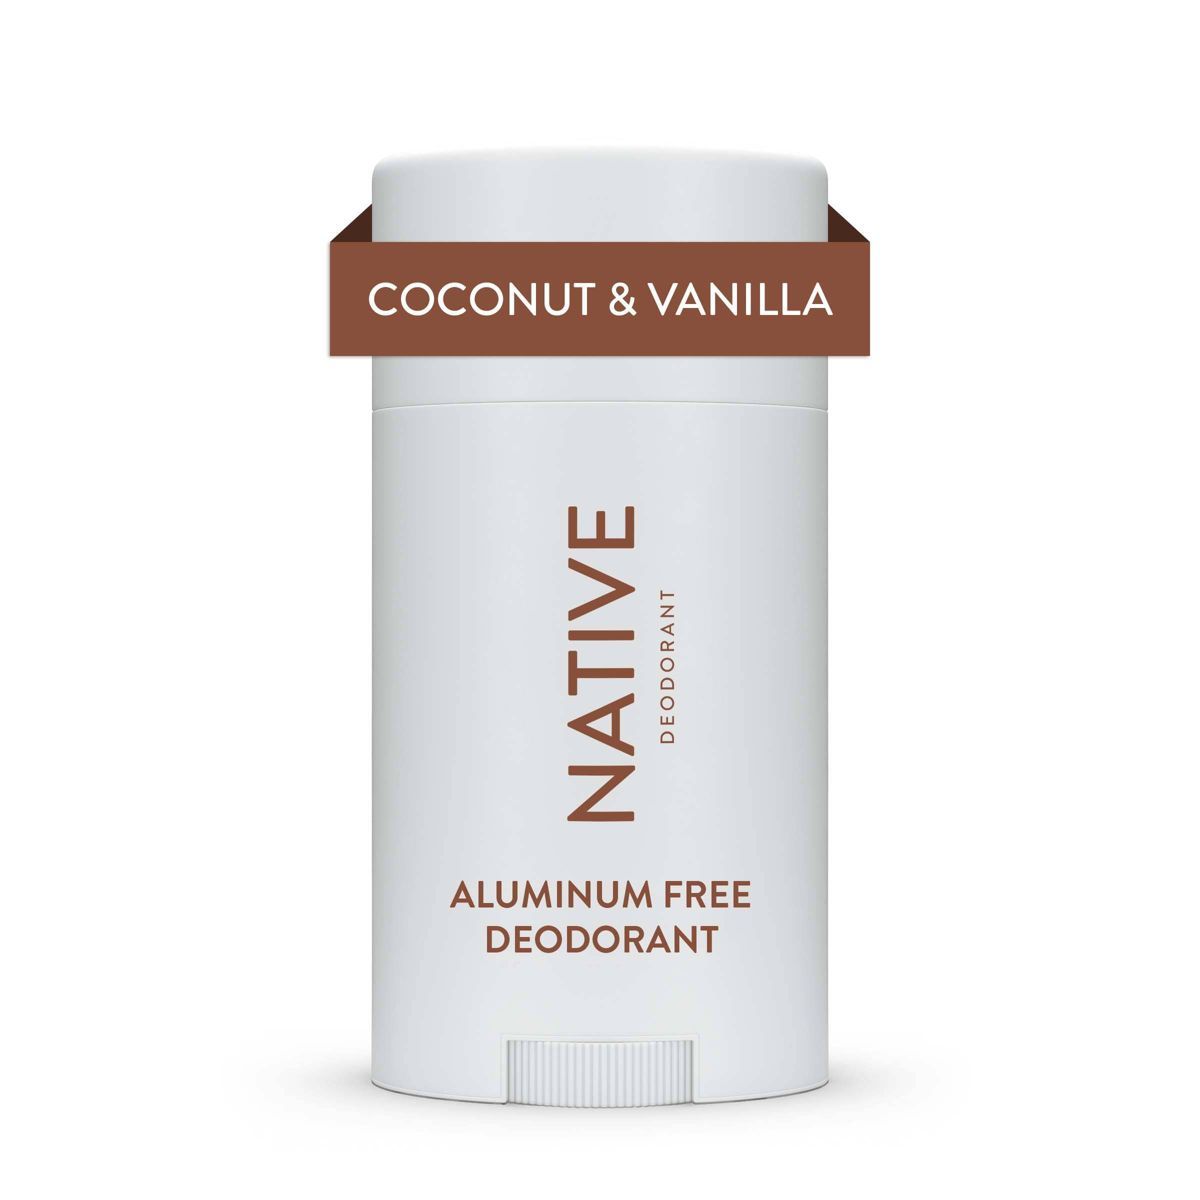 Native Deodorant - Coconut & Vanilla - Aluminum Free - 2.65 oz | Target